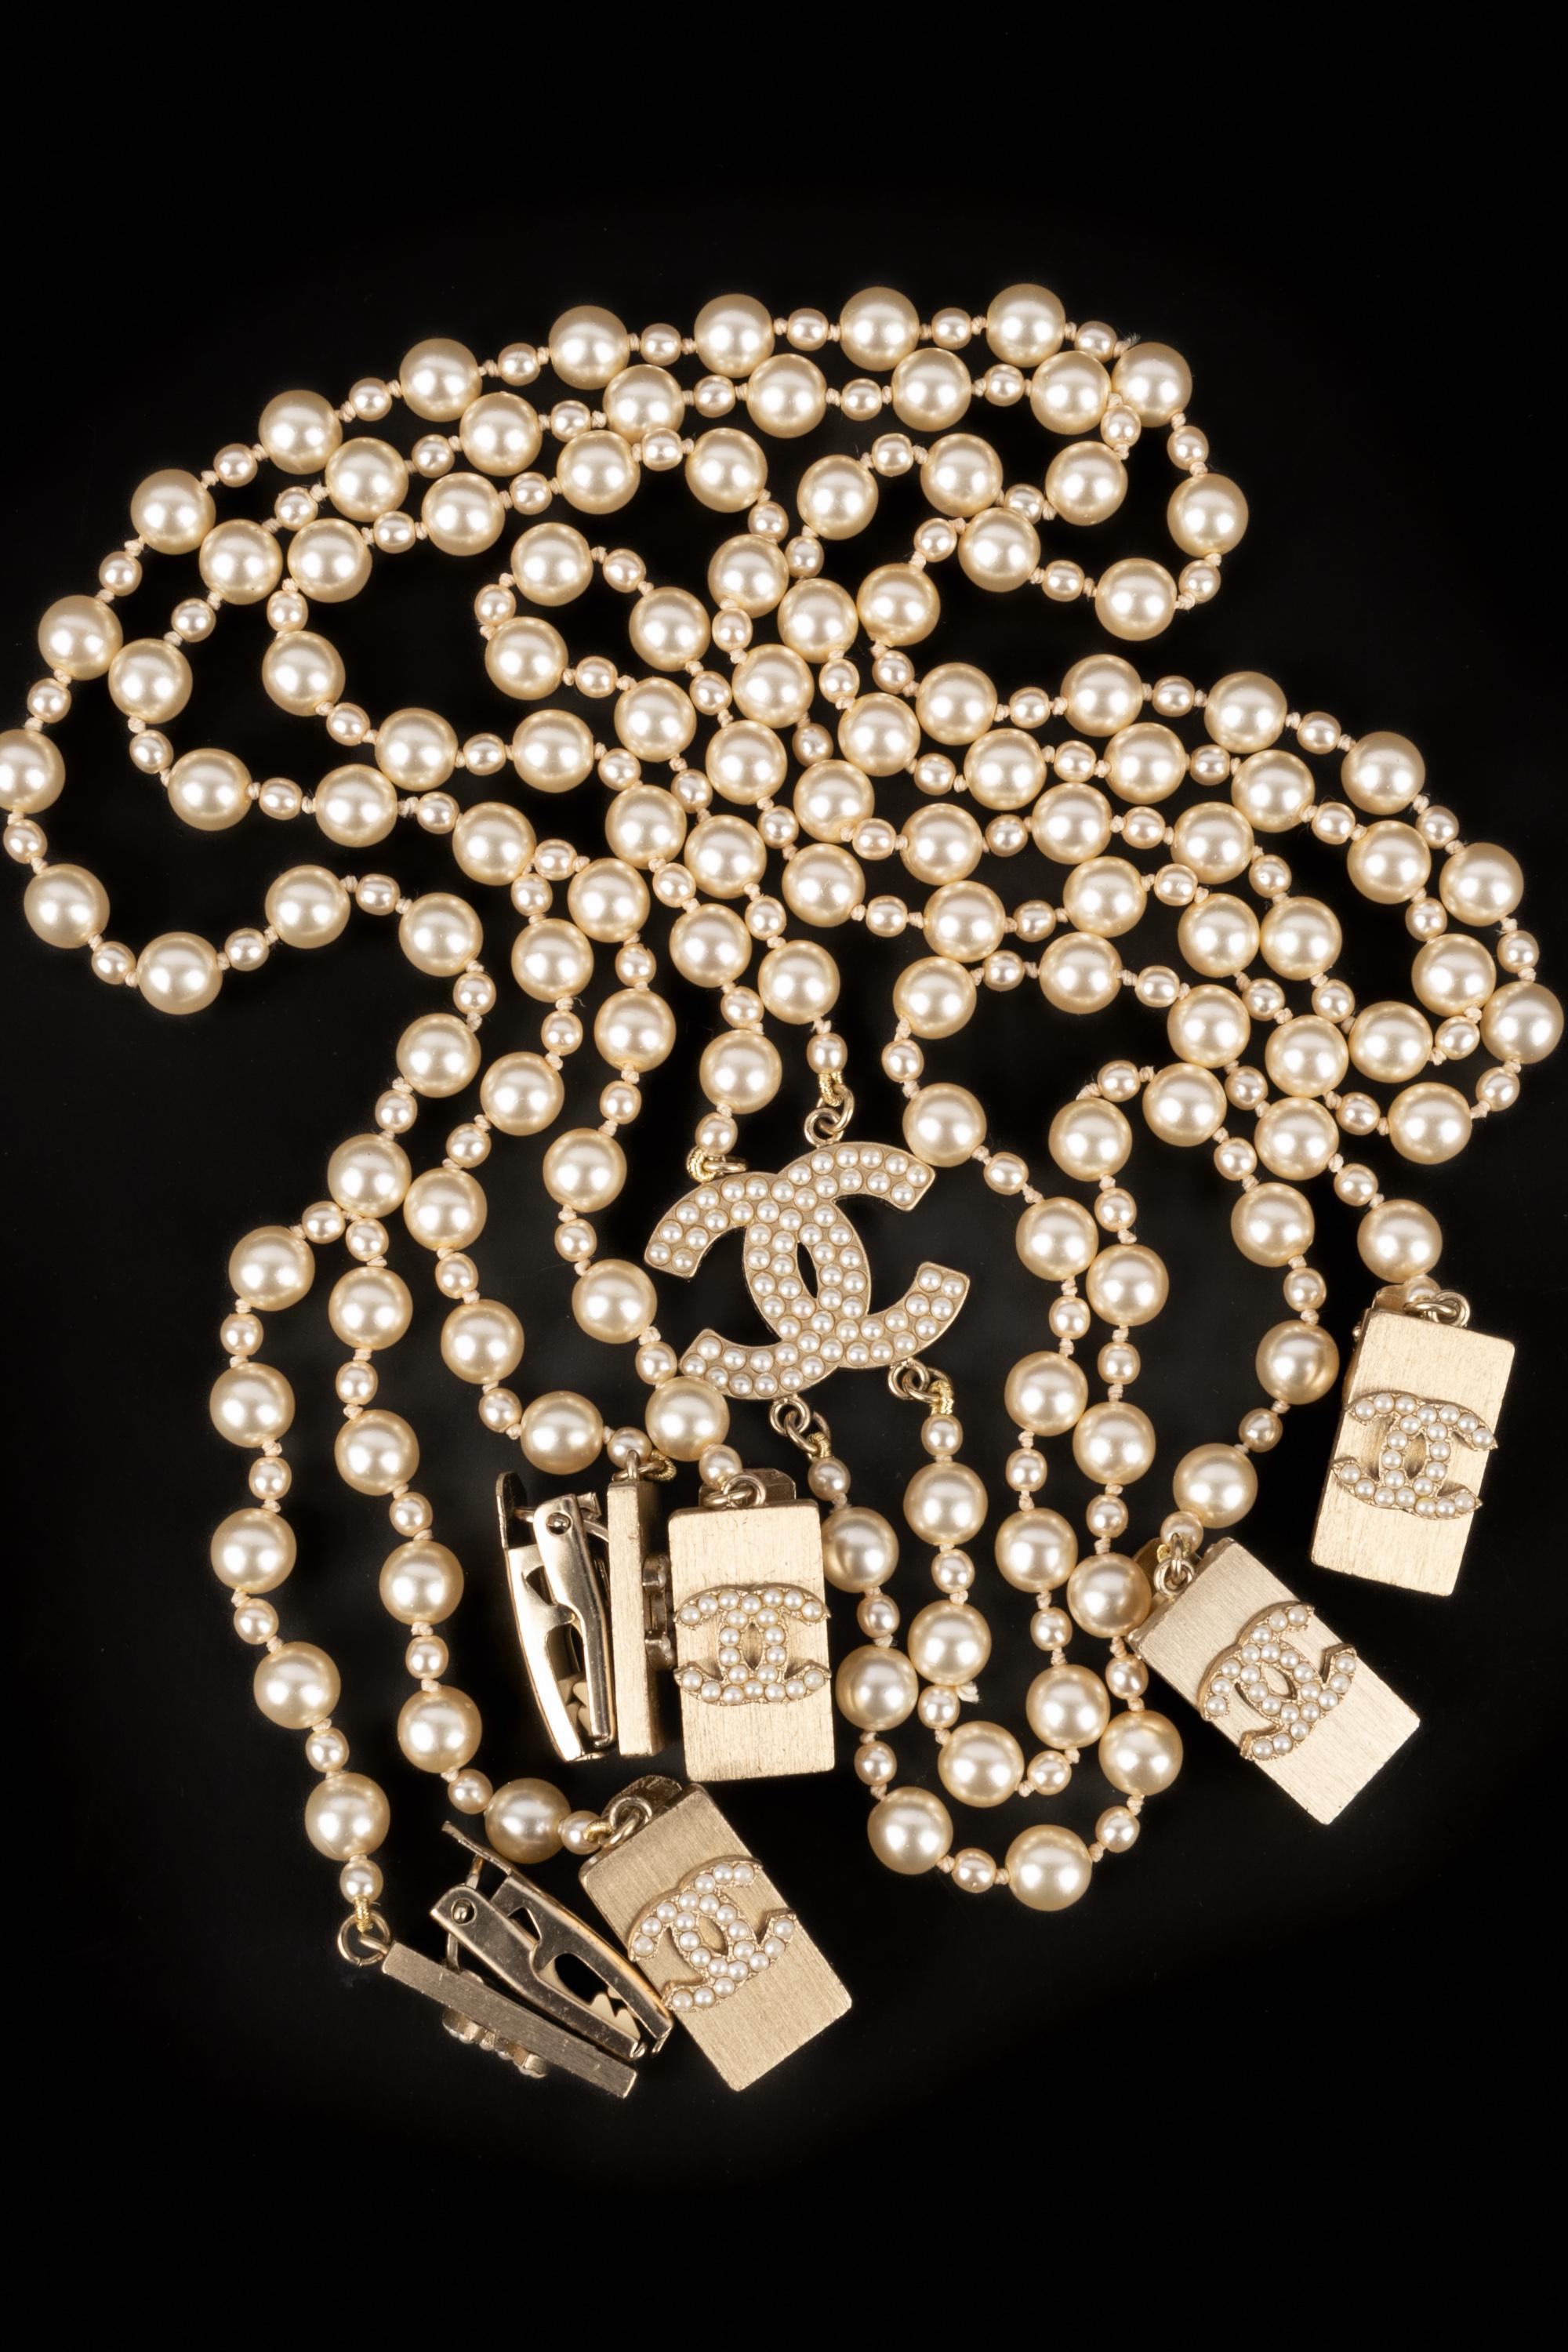 Women's Chanel jewelry suspenders 2004